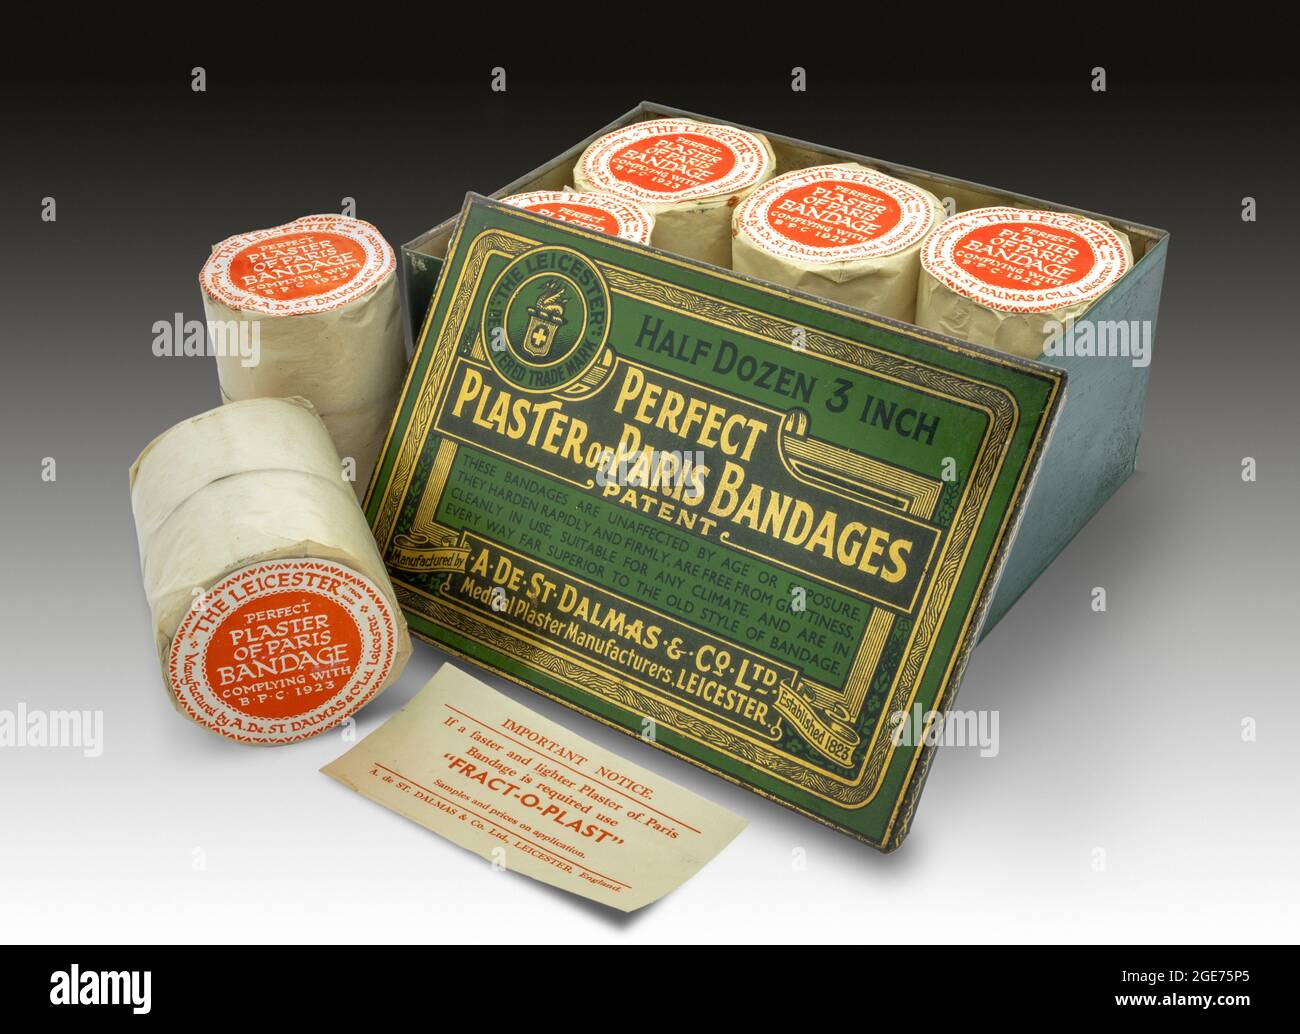 Plaster of Paris Bandages Stock Photo